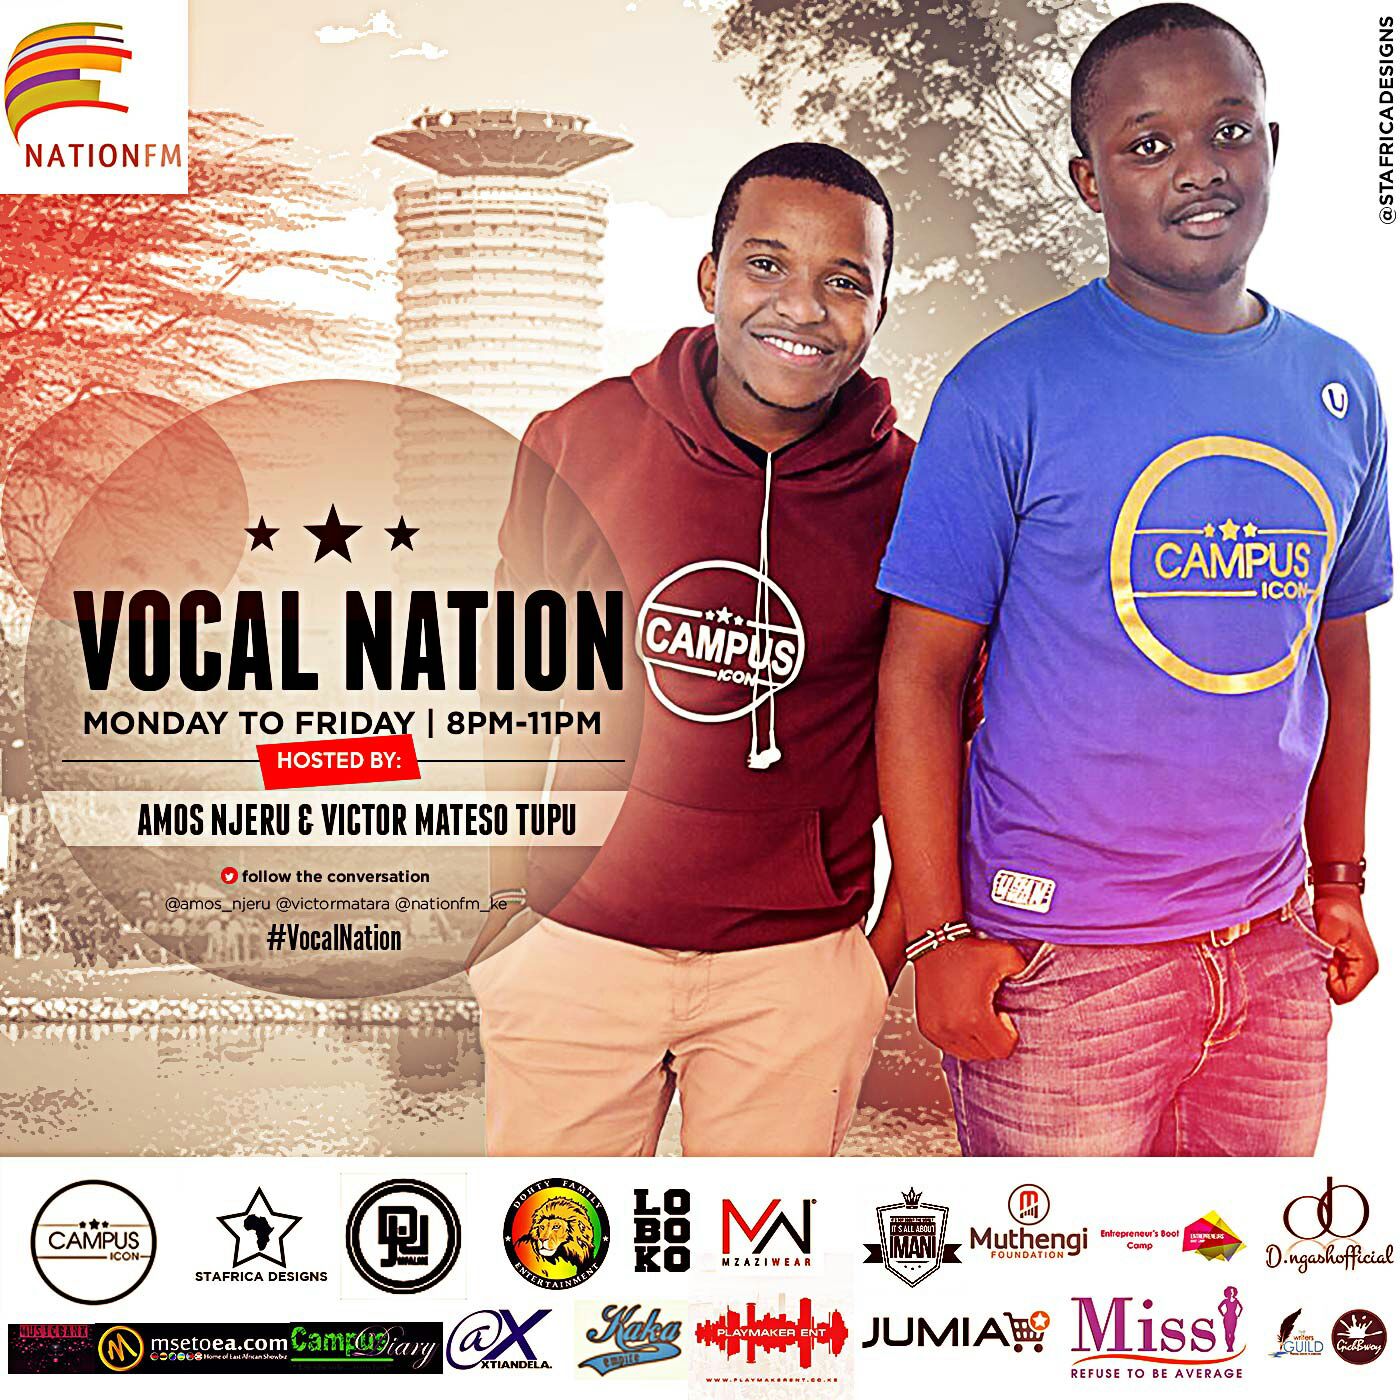 #CampusIconOnNationFM does.EPIC Tonight 8-11pm #VocalNation on @NationFMKe with @amos_njeru & @victormatara